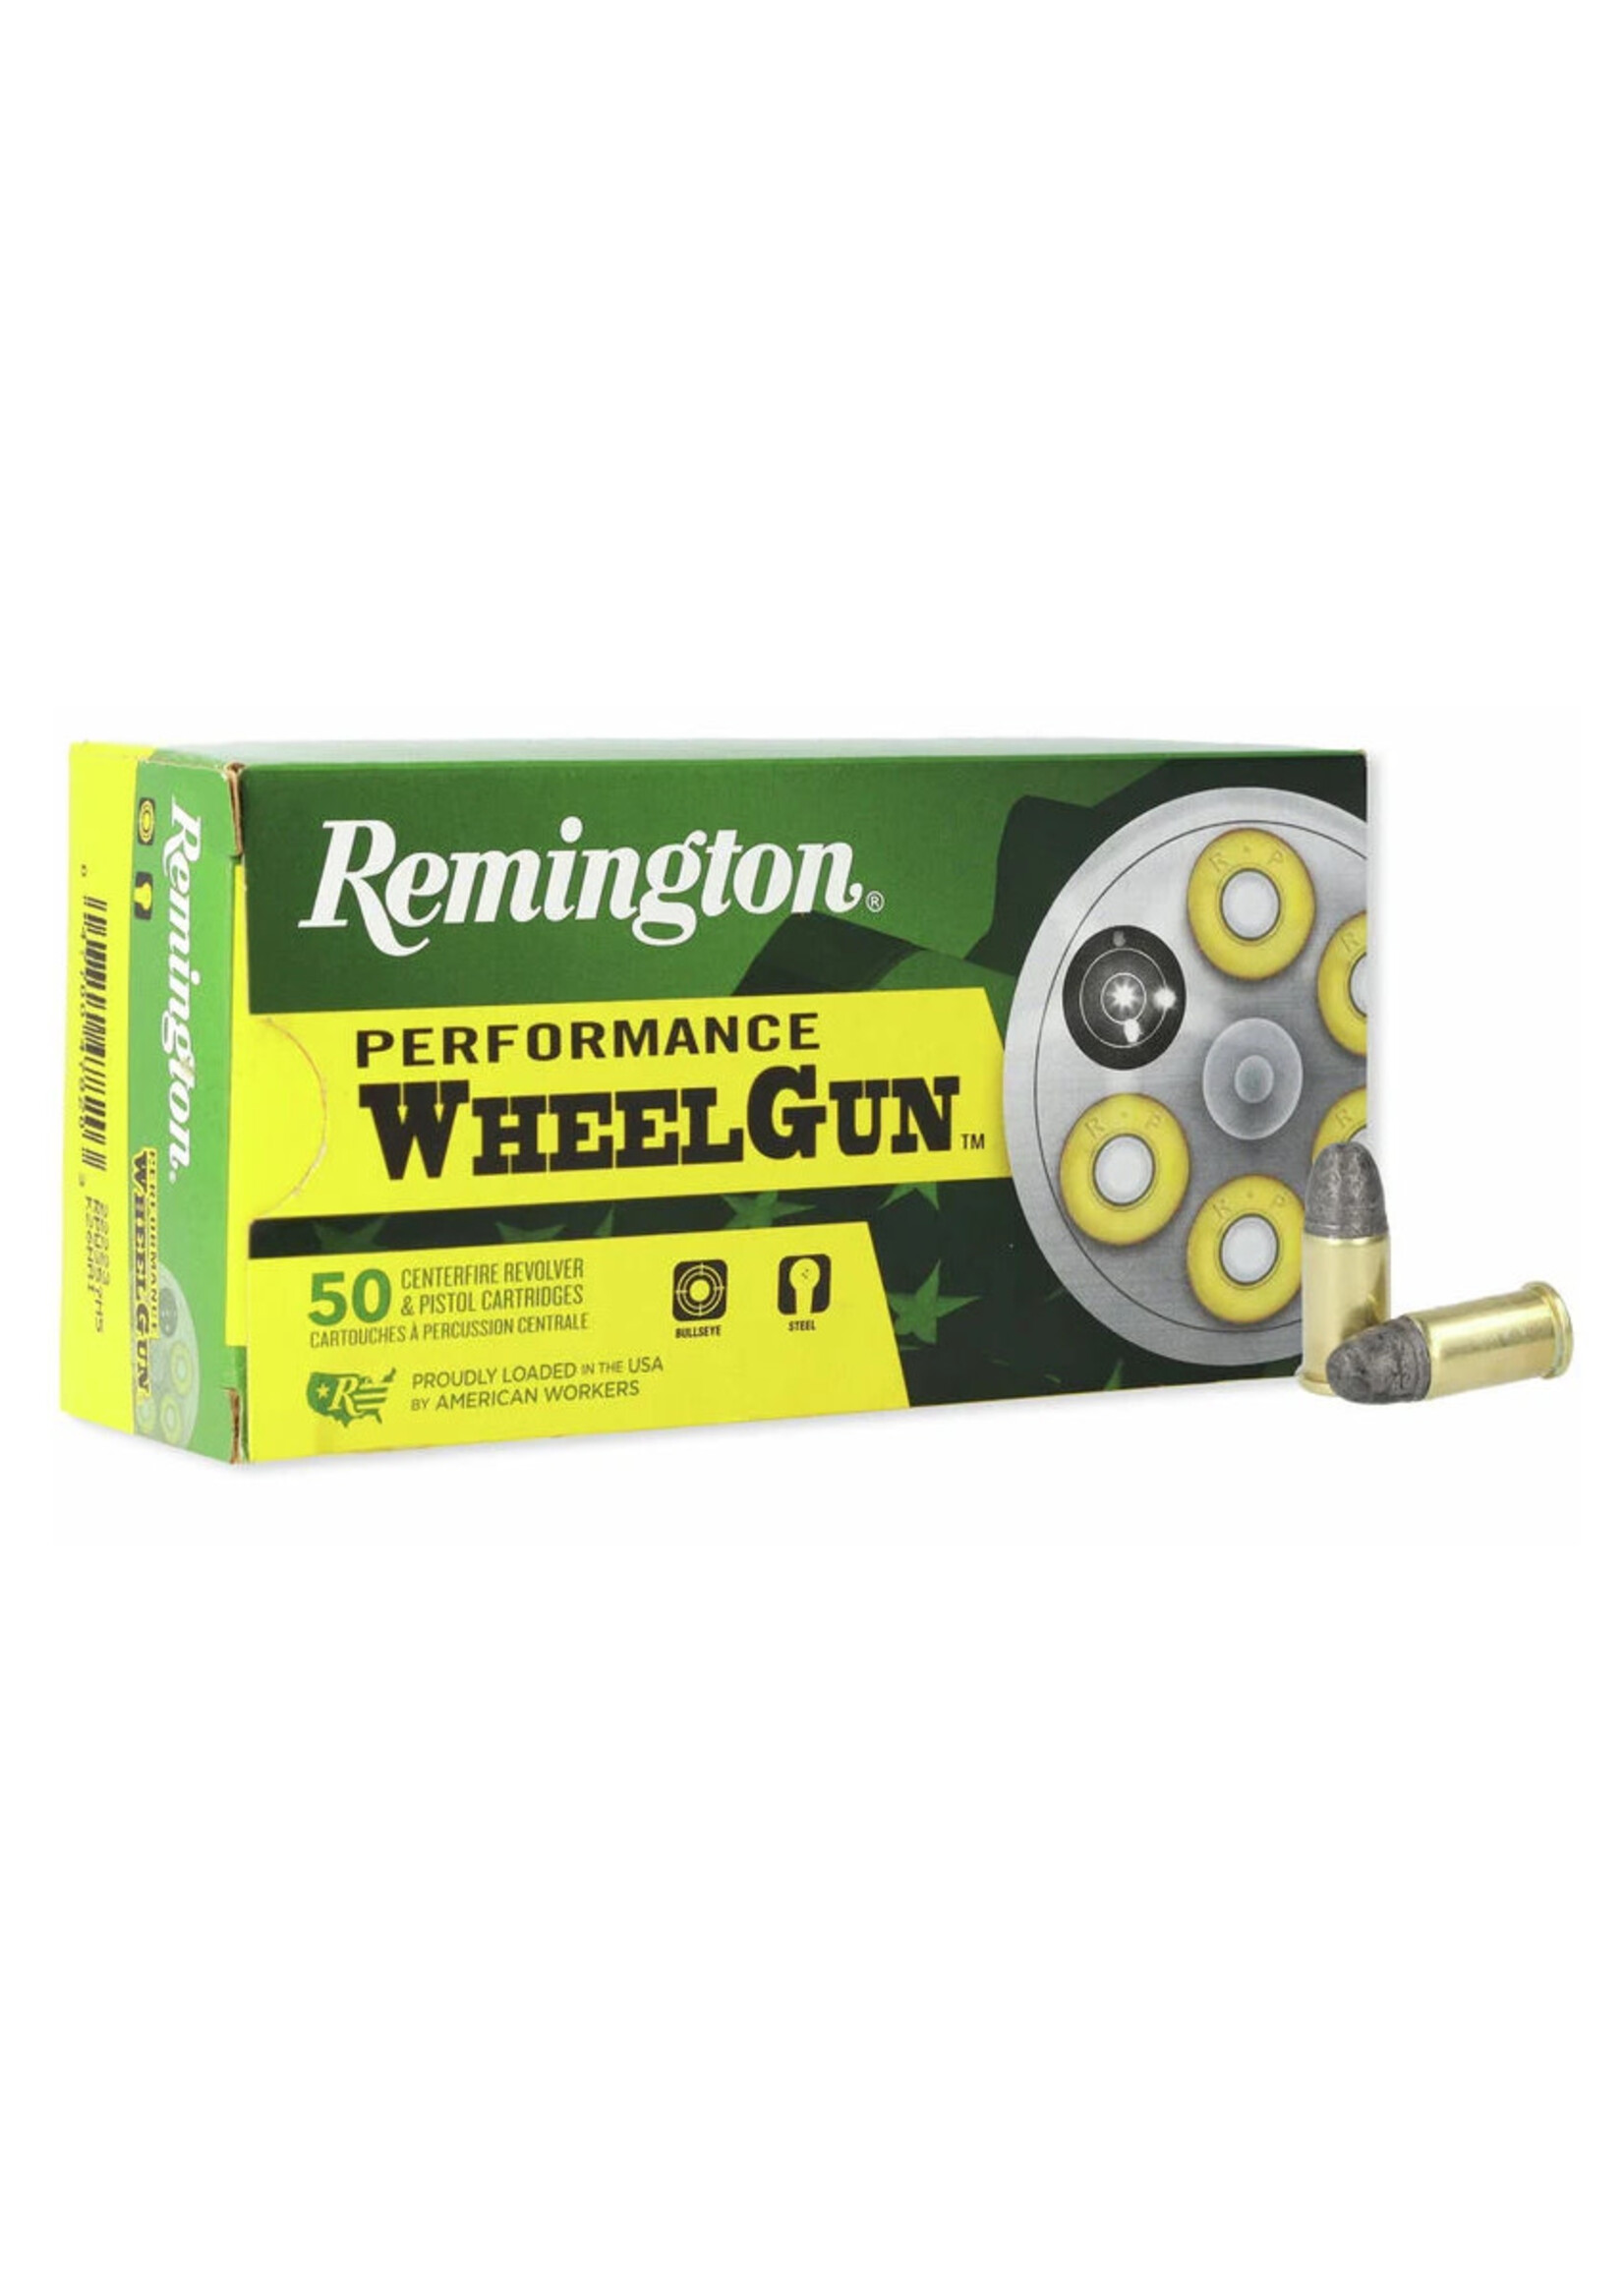 REMINGTON REMINGTON 32 S&W 88 GR LEAD ROUND NOSE PERFORMANCE WHEEL GUN